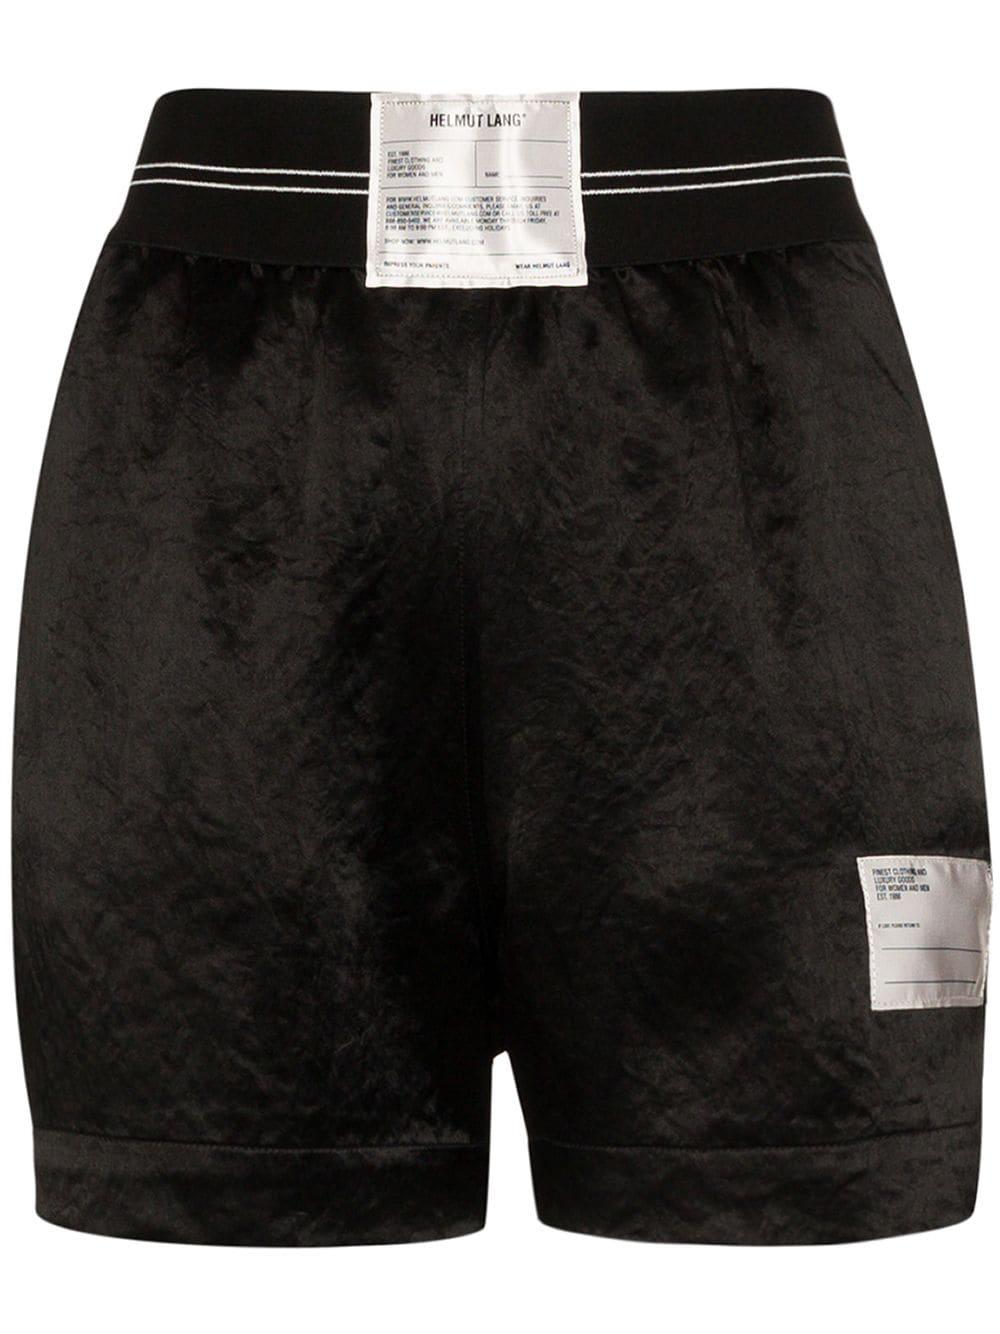 Helmut Lang Logo Patch Boxer Shorts in Black - Lyst